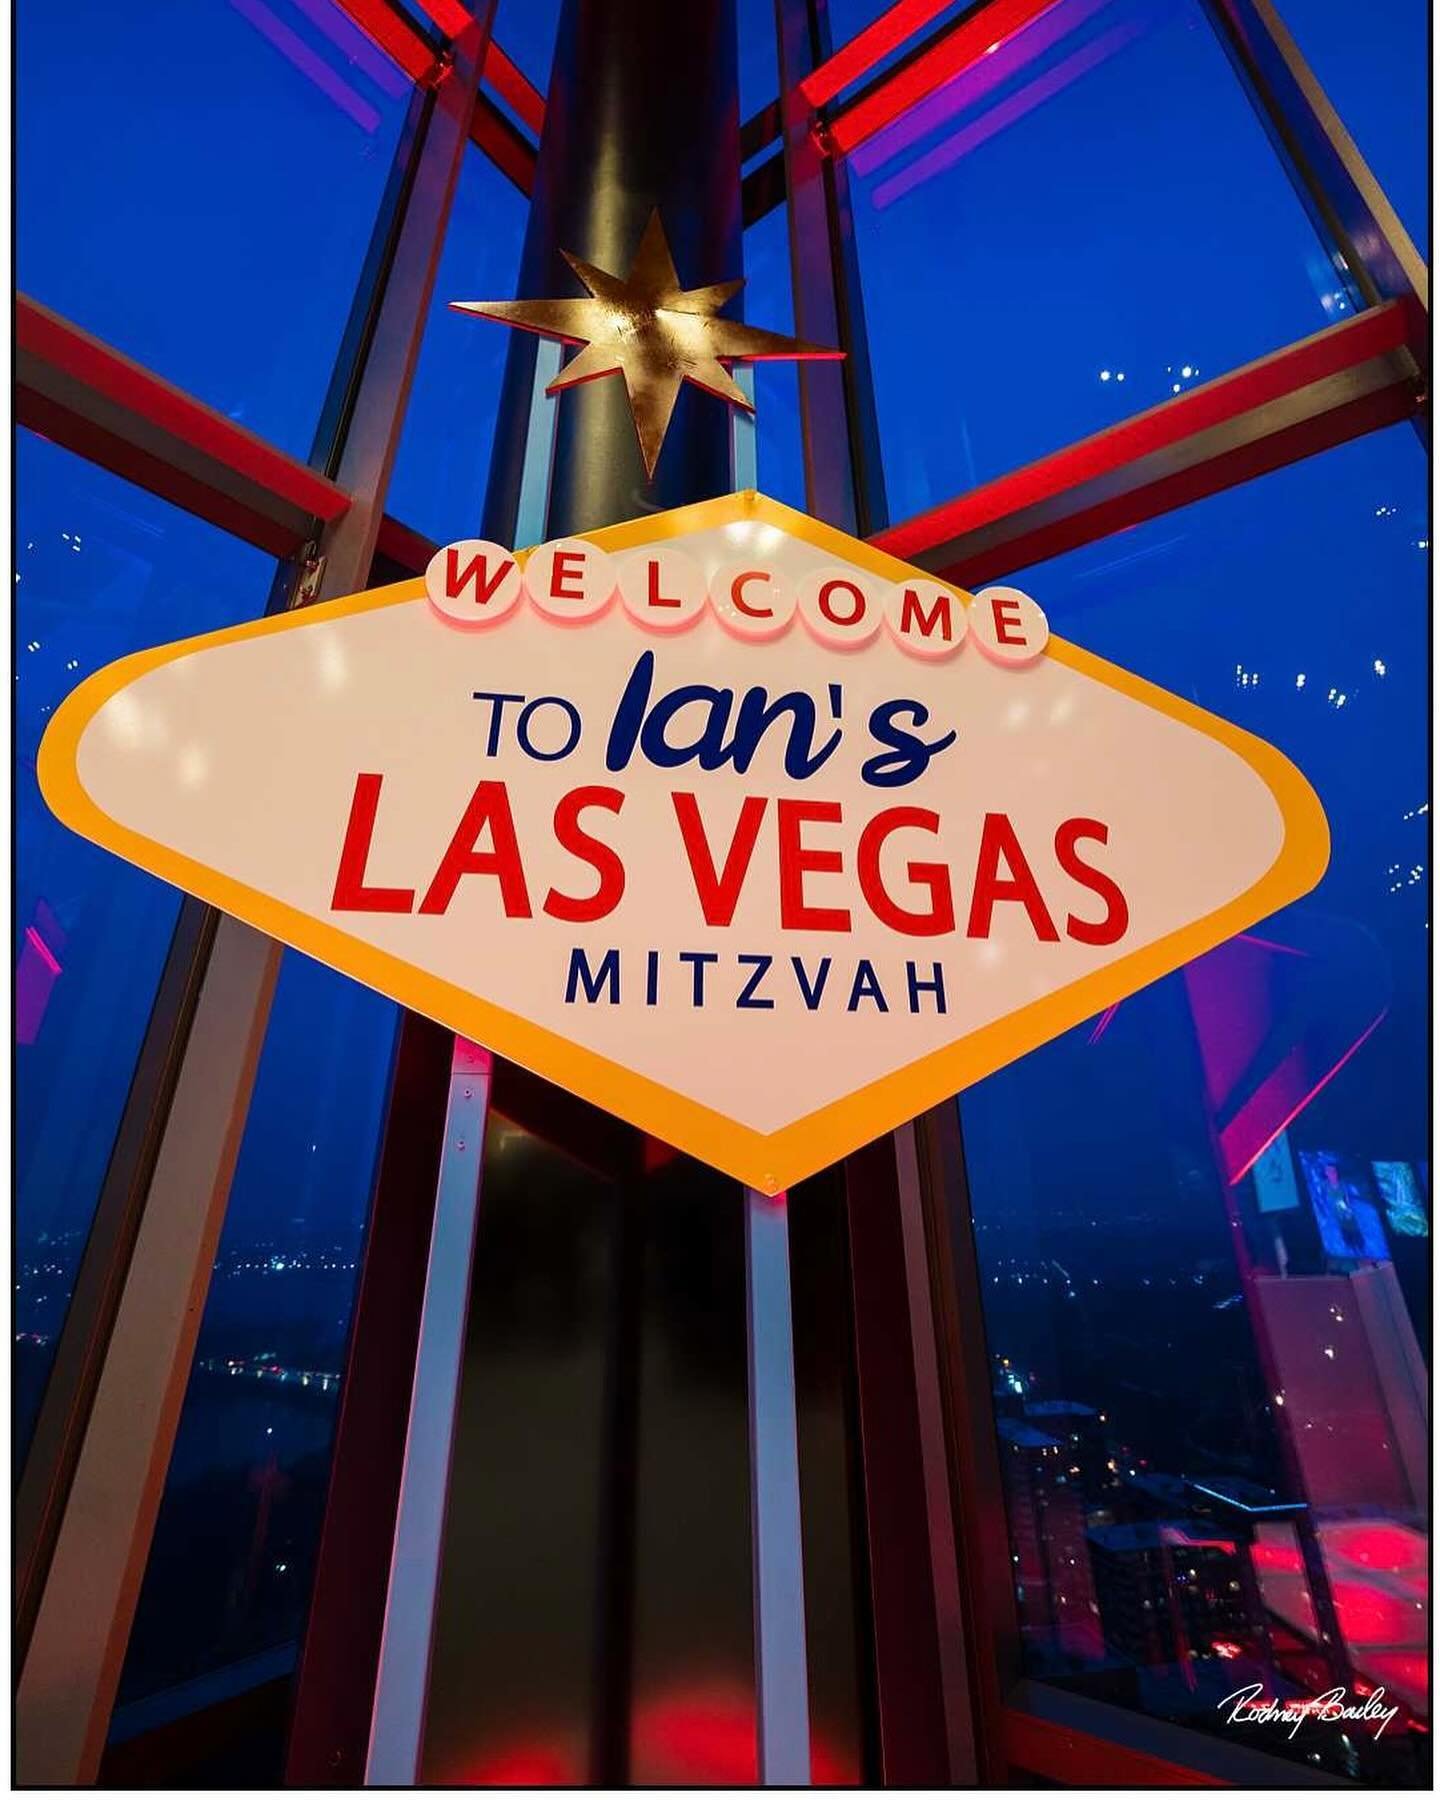 Ian hit the jackpot at his Las Vegas themed Bar Mitzvah! Roll with us through the night of Vegas glamour and bright city lights 🎲

📸 @rodneybailey.mitzvah.photos 

#vegastheme #barmitzvahdecor #barmitzvahparty #barmitvahideas #mitzvahdc #mitzvahmar